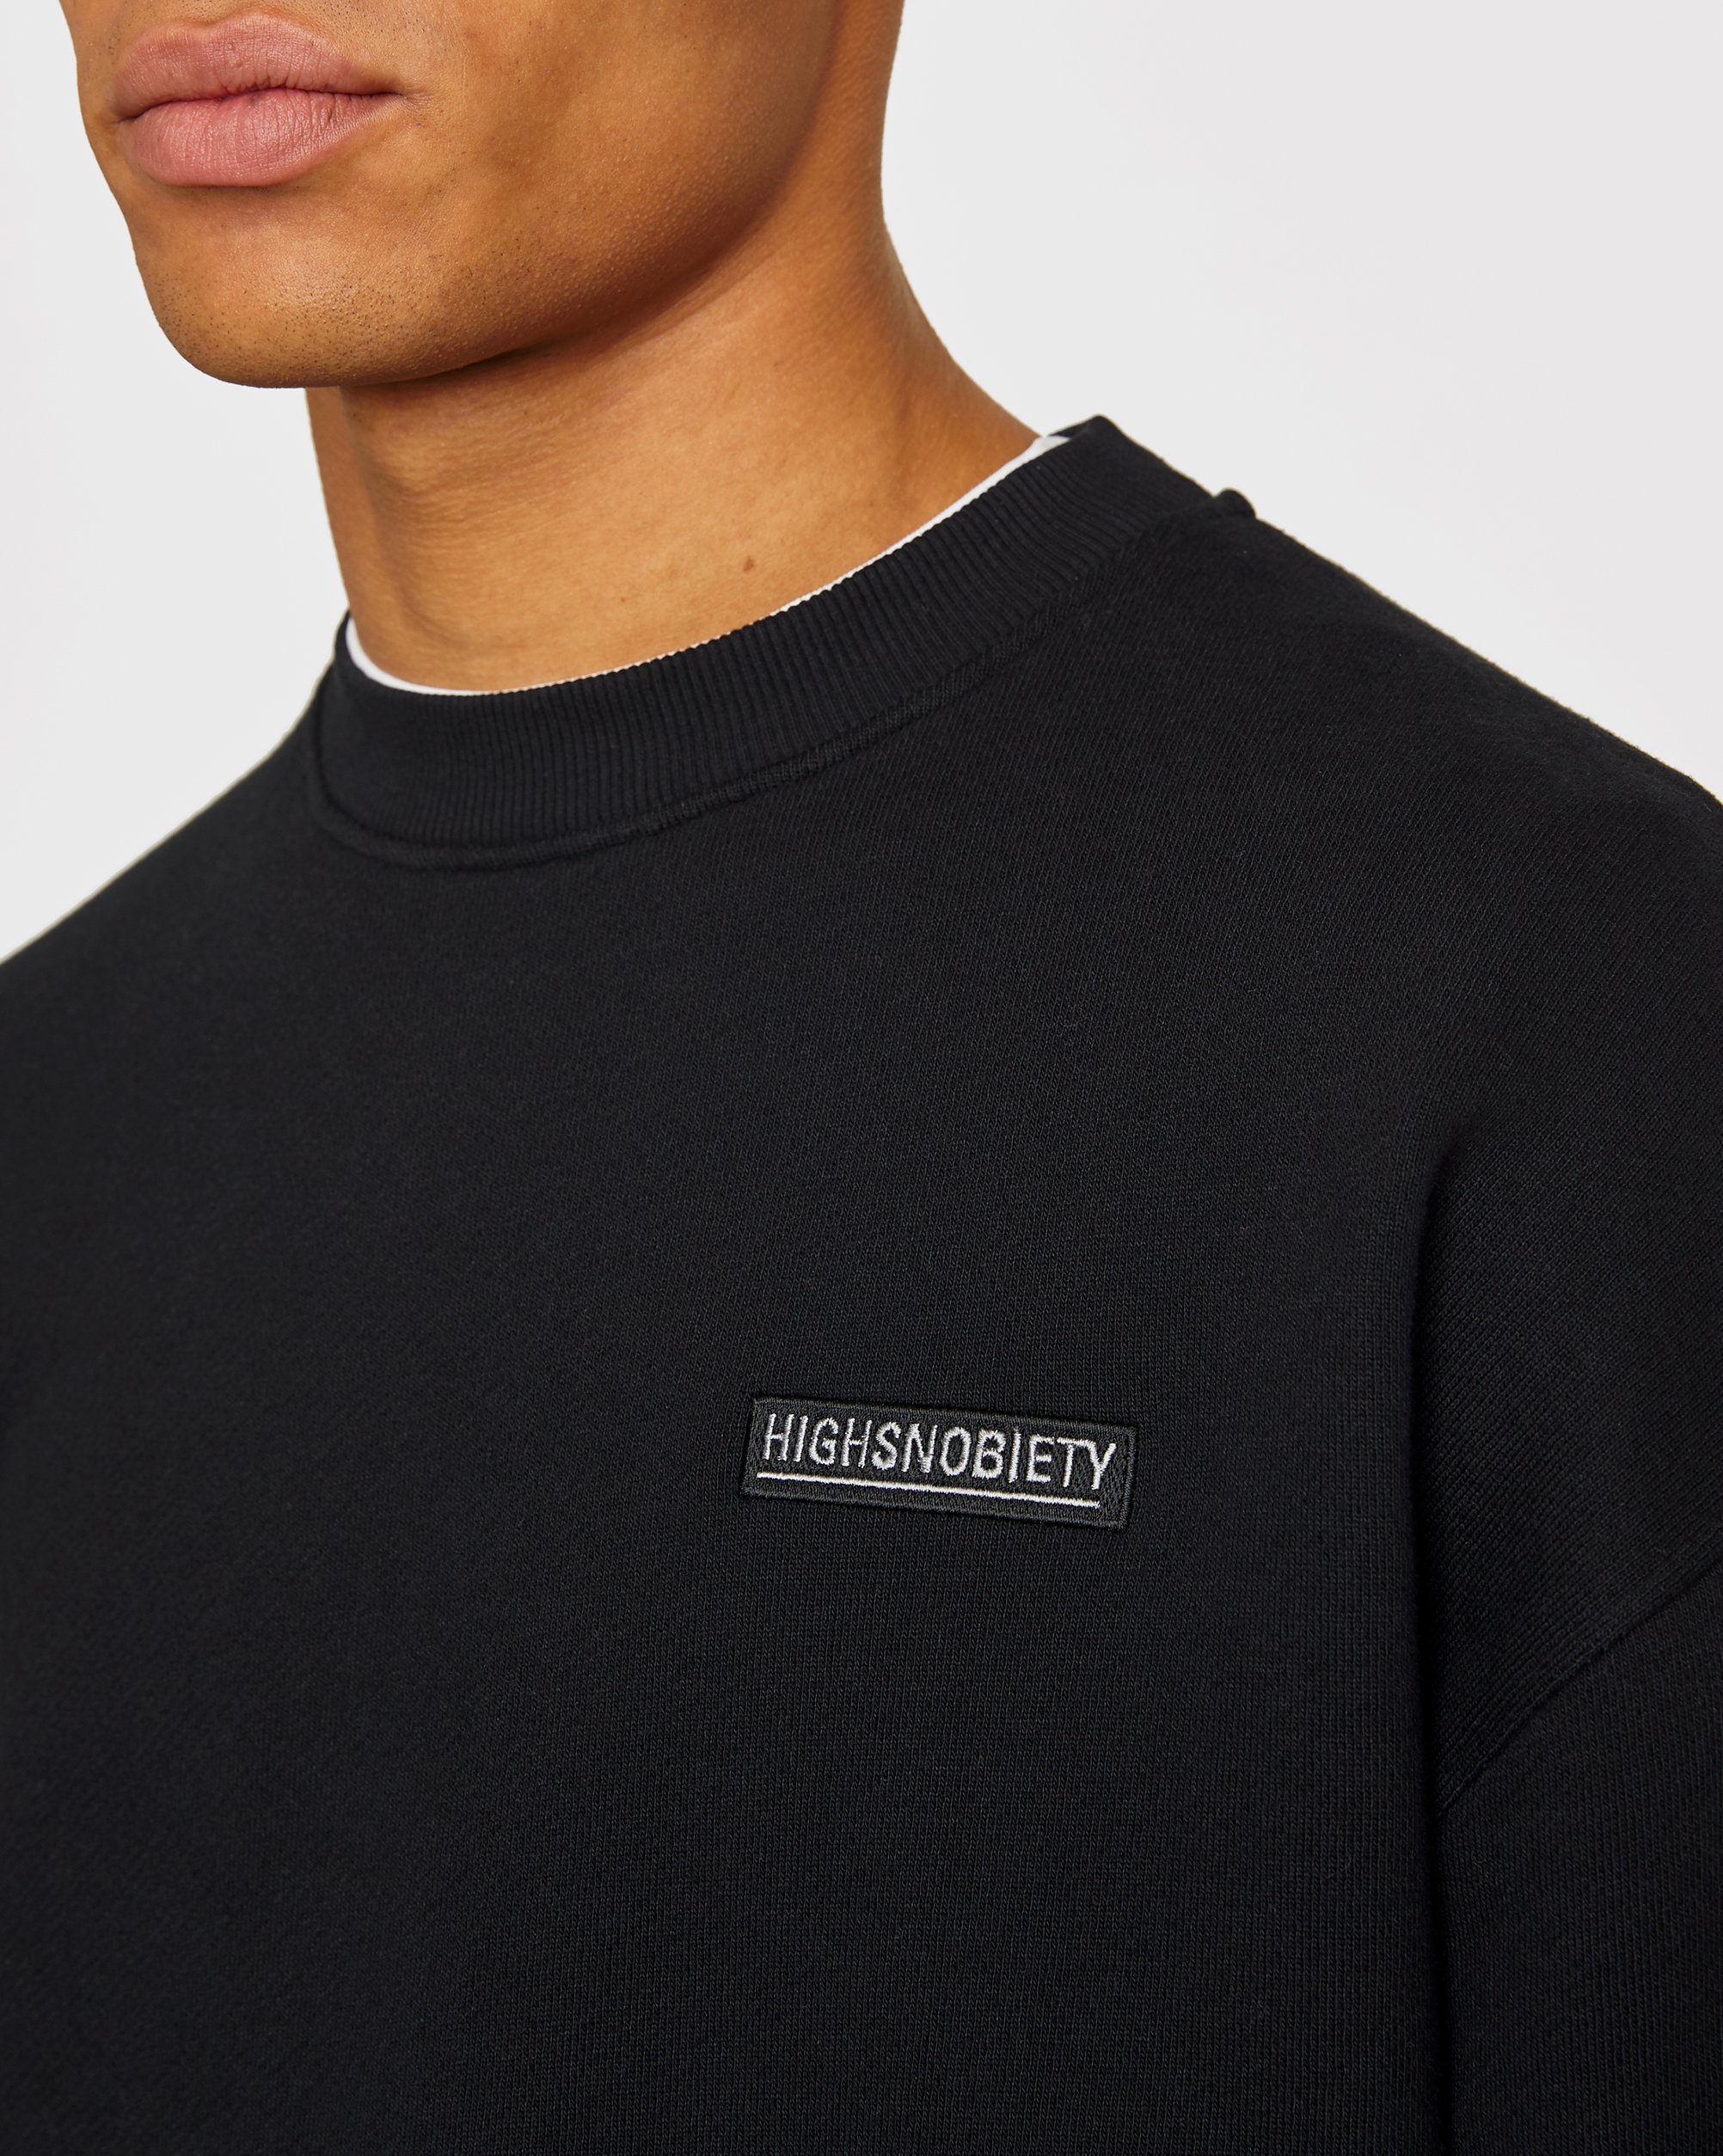 Highsnobiety - Staples Sweatshirt Black - Clothing - Black - Image 5